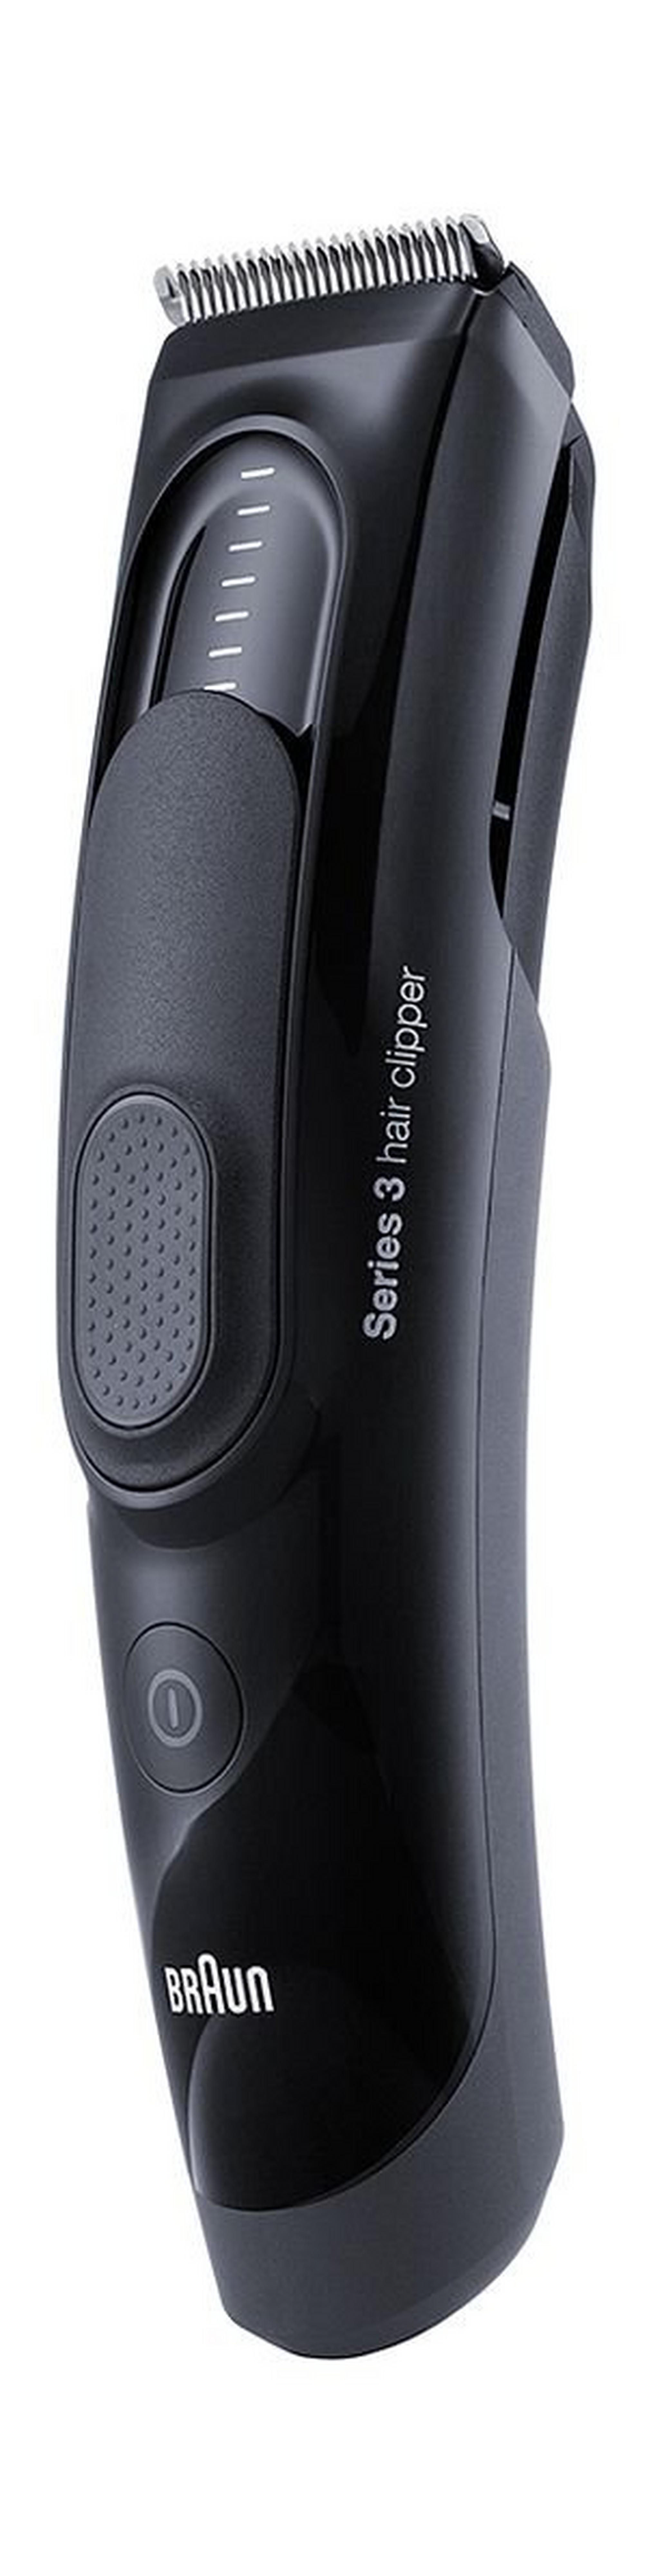 Braun HC5050 Series 5 Washable Travel Hair Trimmer - Black